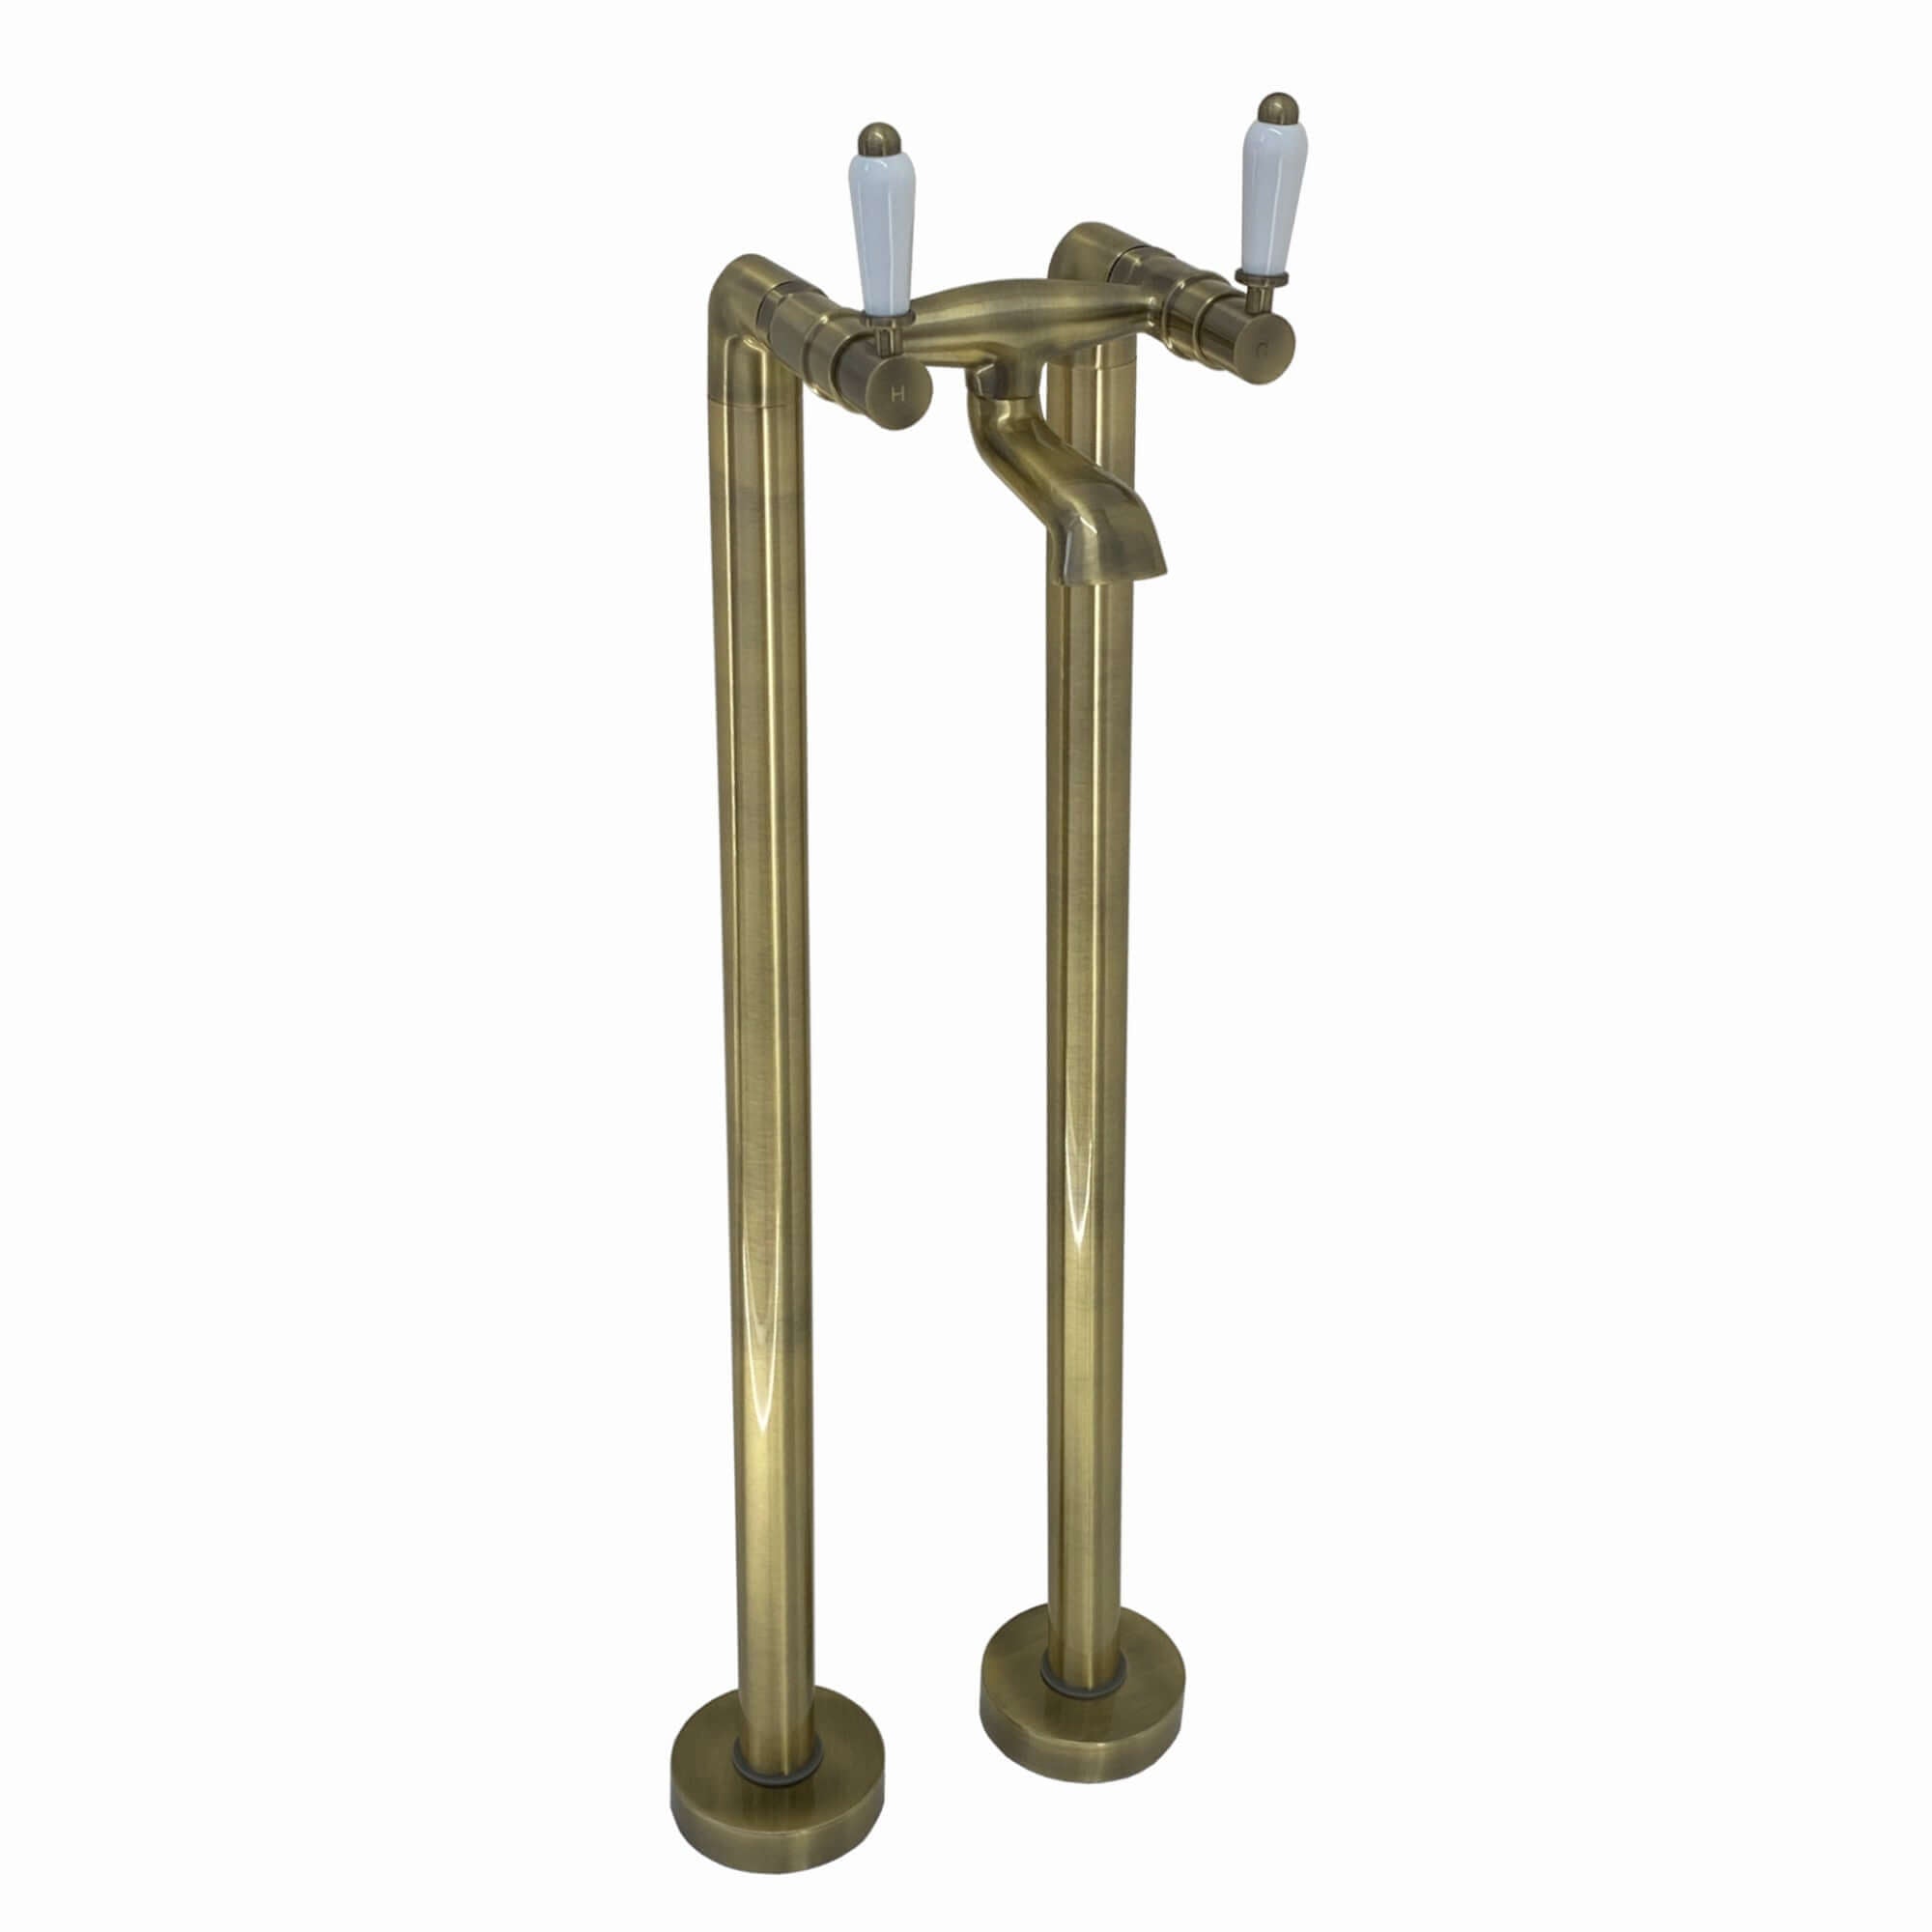 Downton floorstanding bath mixer tap with white ceramic levers - antique bronze - Taps